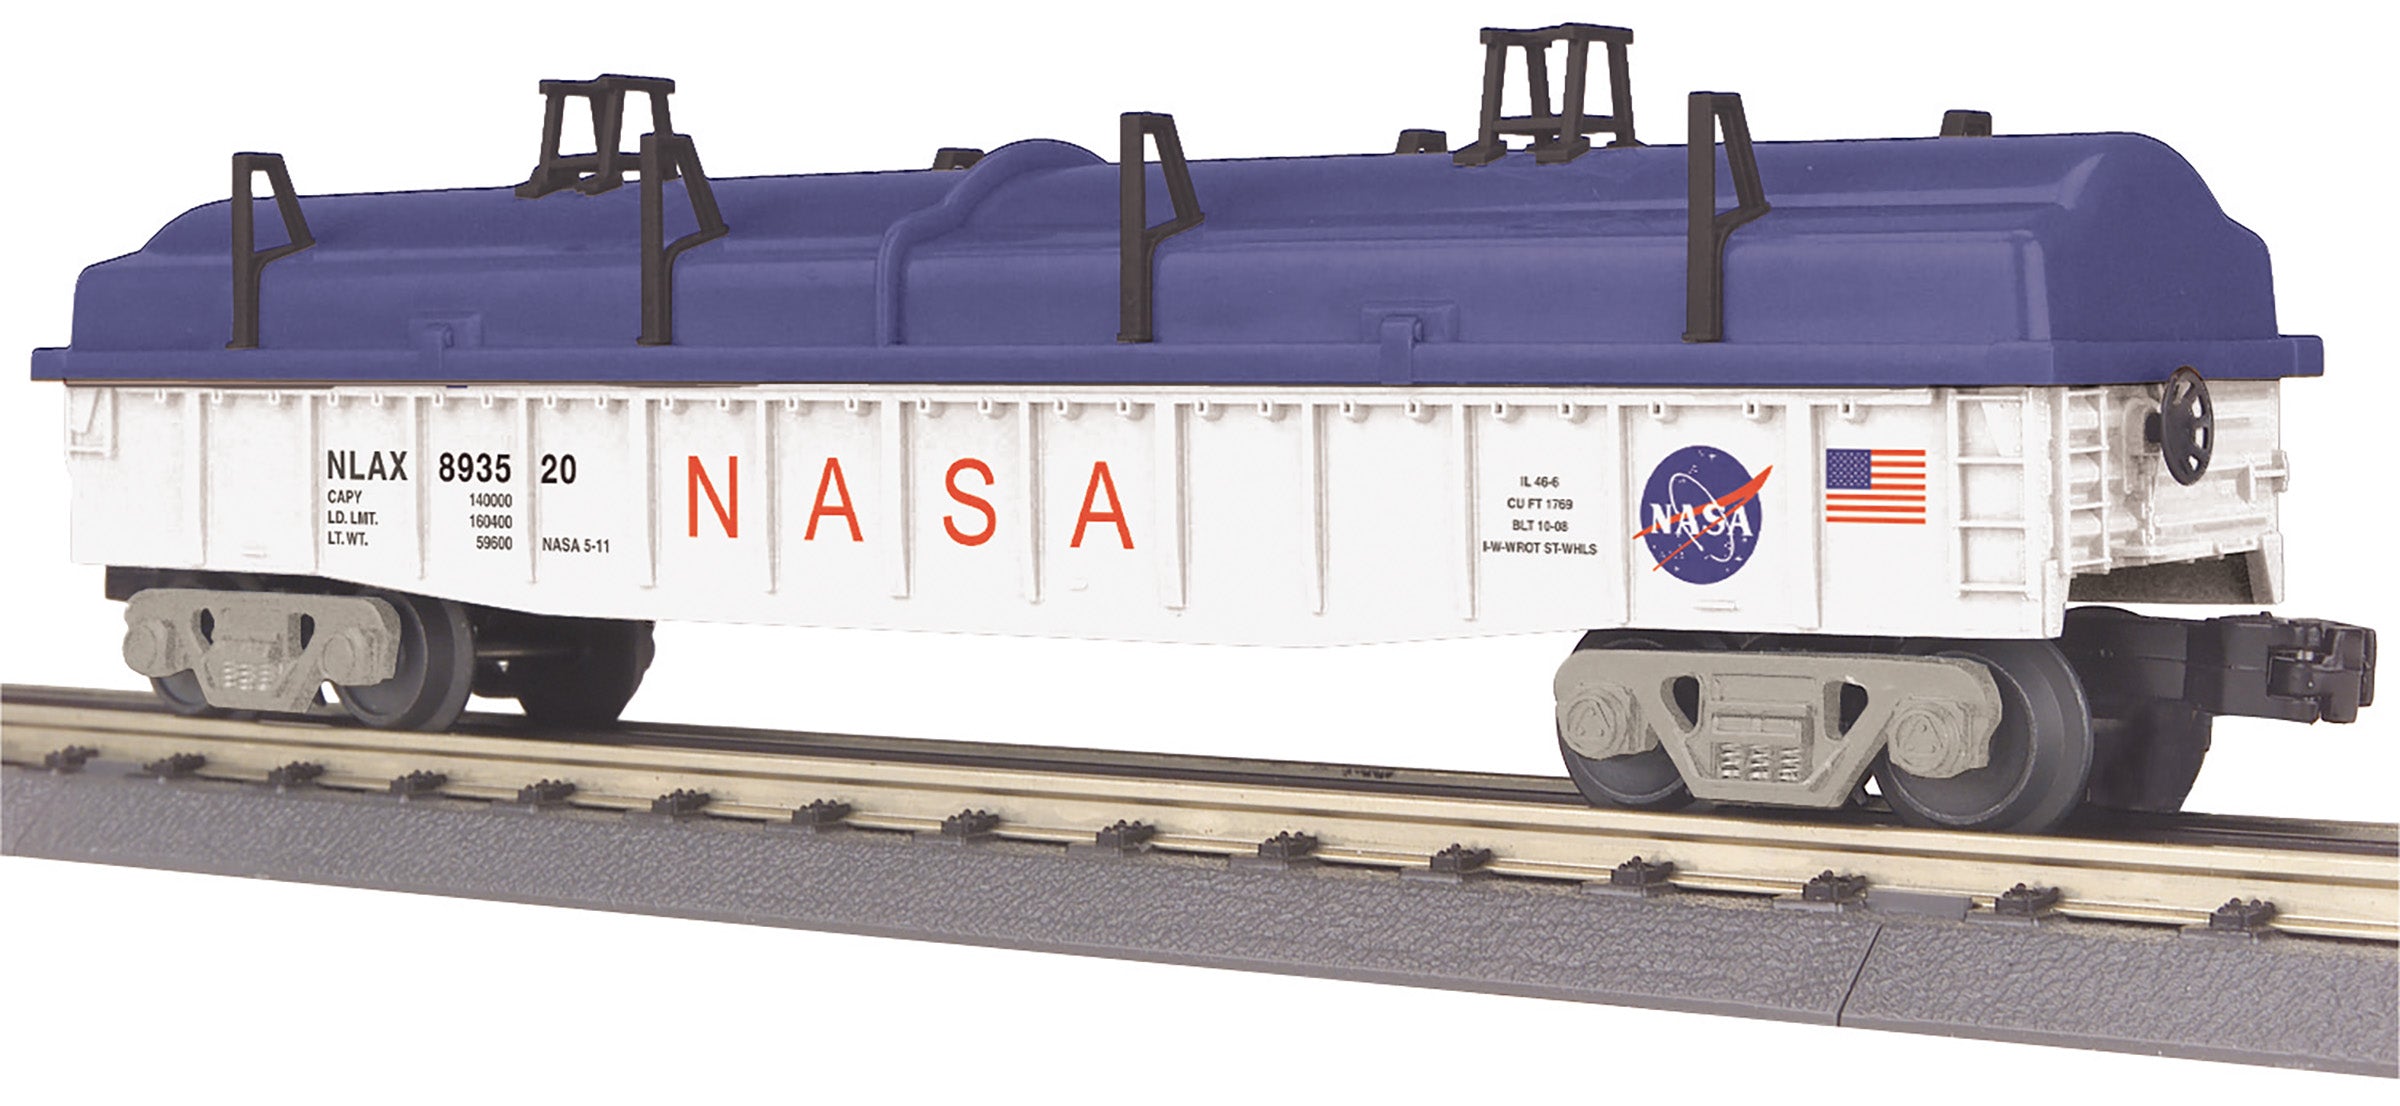 MTH 30-72233 - Gondola Car "NASA" #893526 w/ Cover